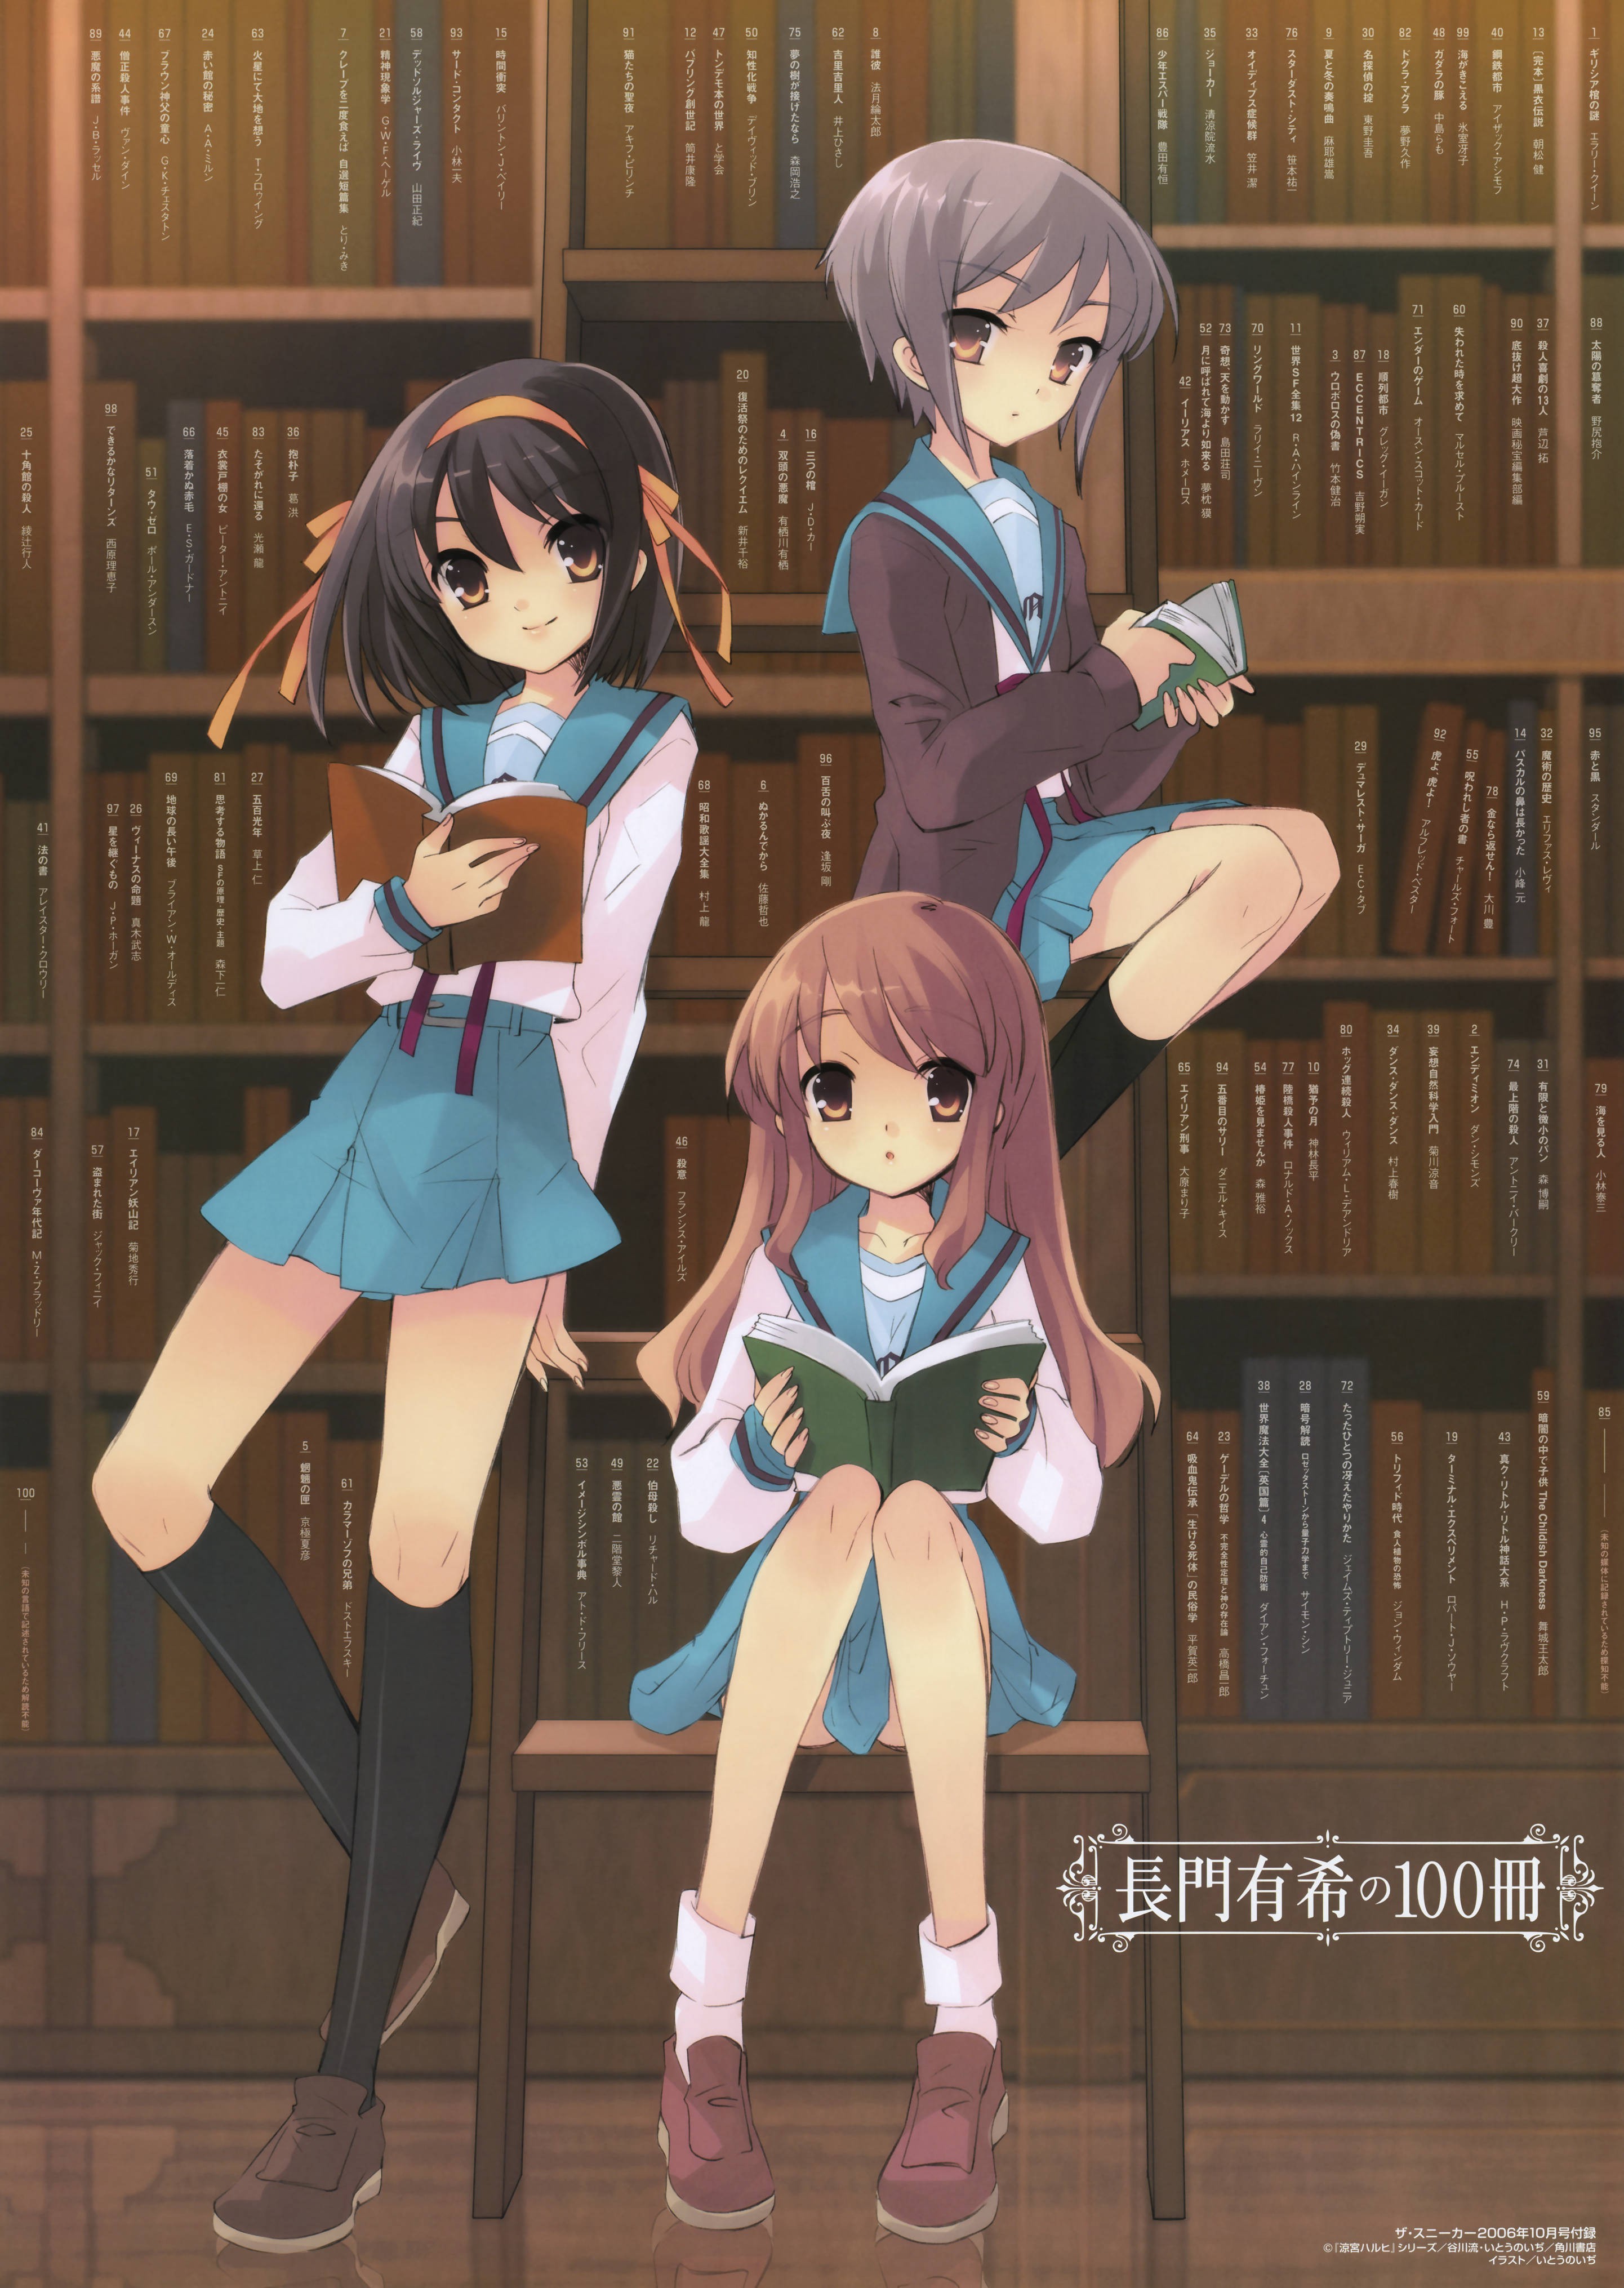 Anime 2883x4062 anime The Melancholy of Haruhi Suzumiya anime girls library books